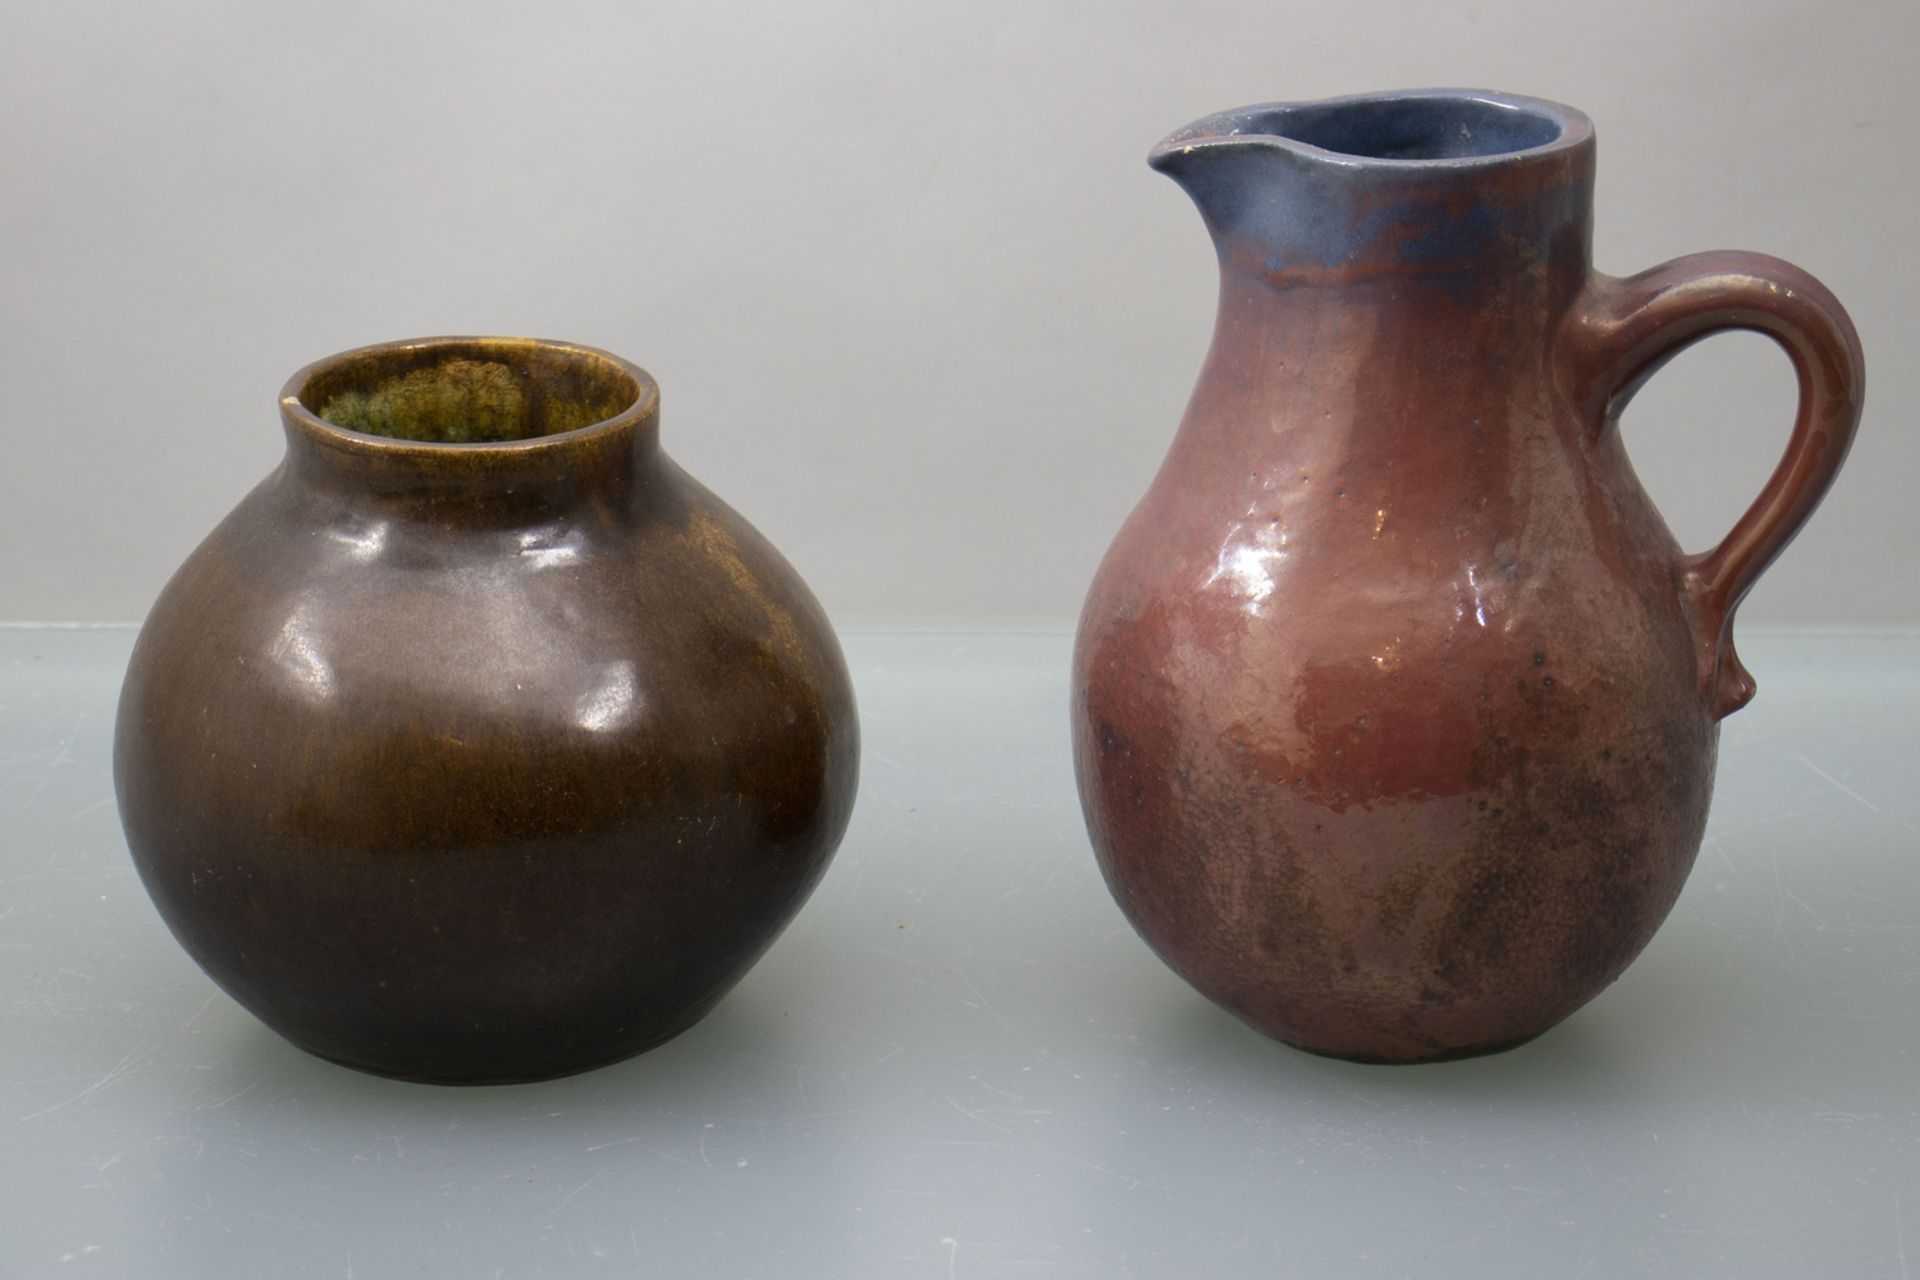 Keramikvase und Keramikkanne / A ceramic vase and jug, 20. Jh.